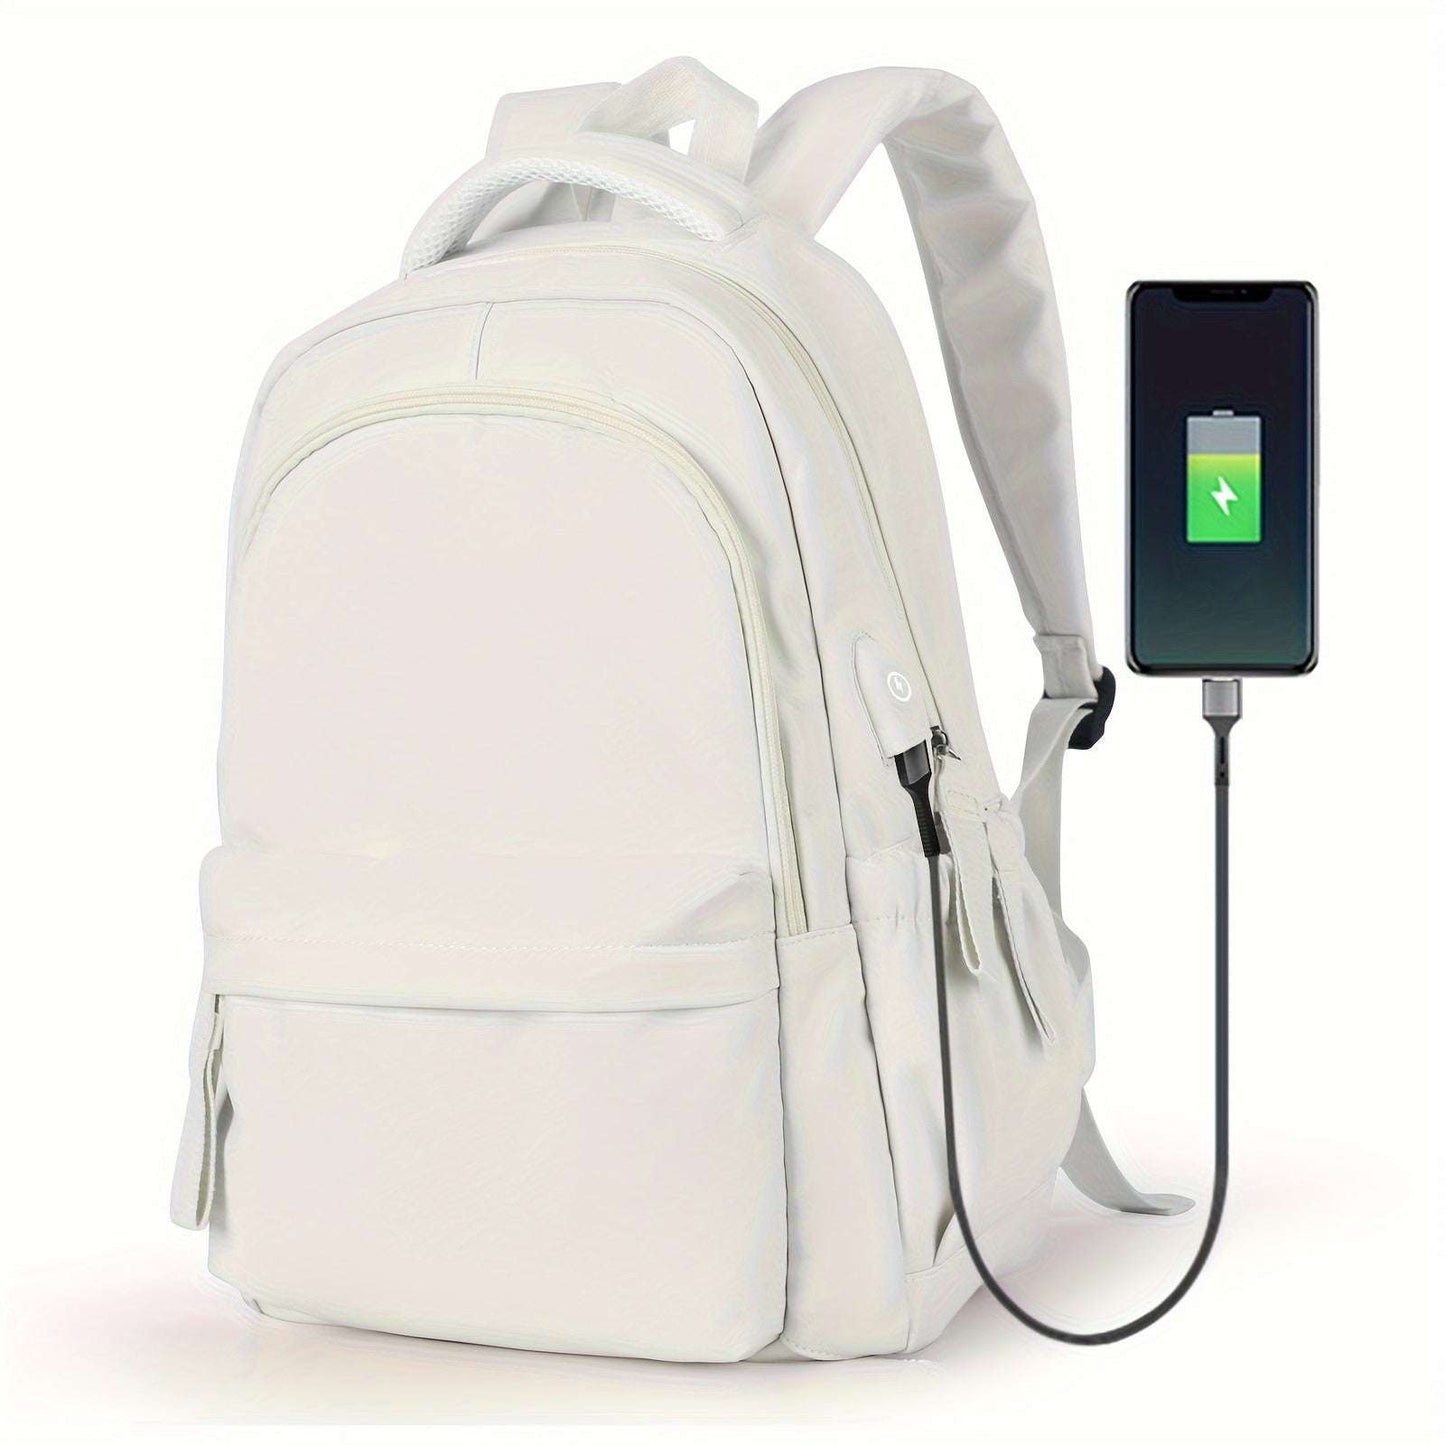 Schoolbag backpack High school student simple backpack 28 Backpack OK•PhotoFineArt OK•PhotoFineArt